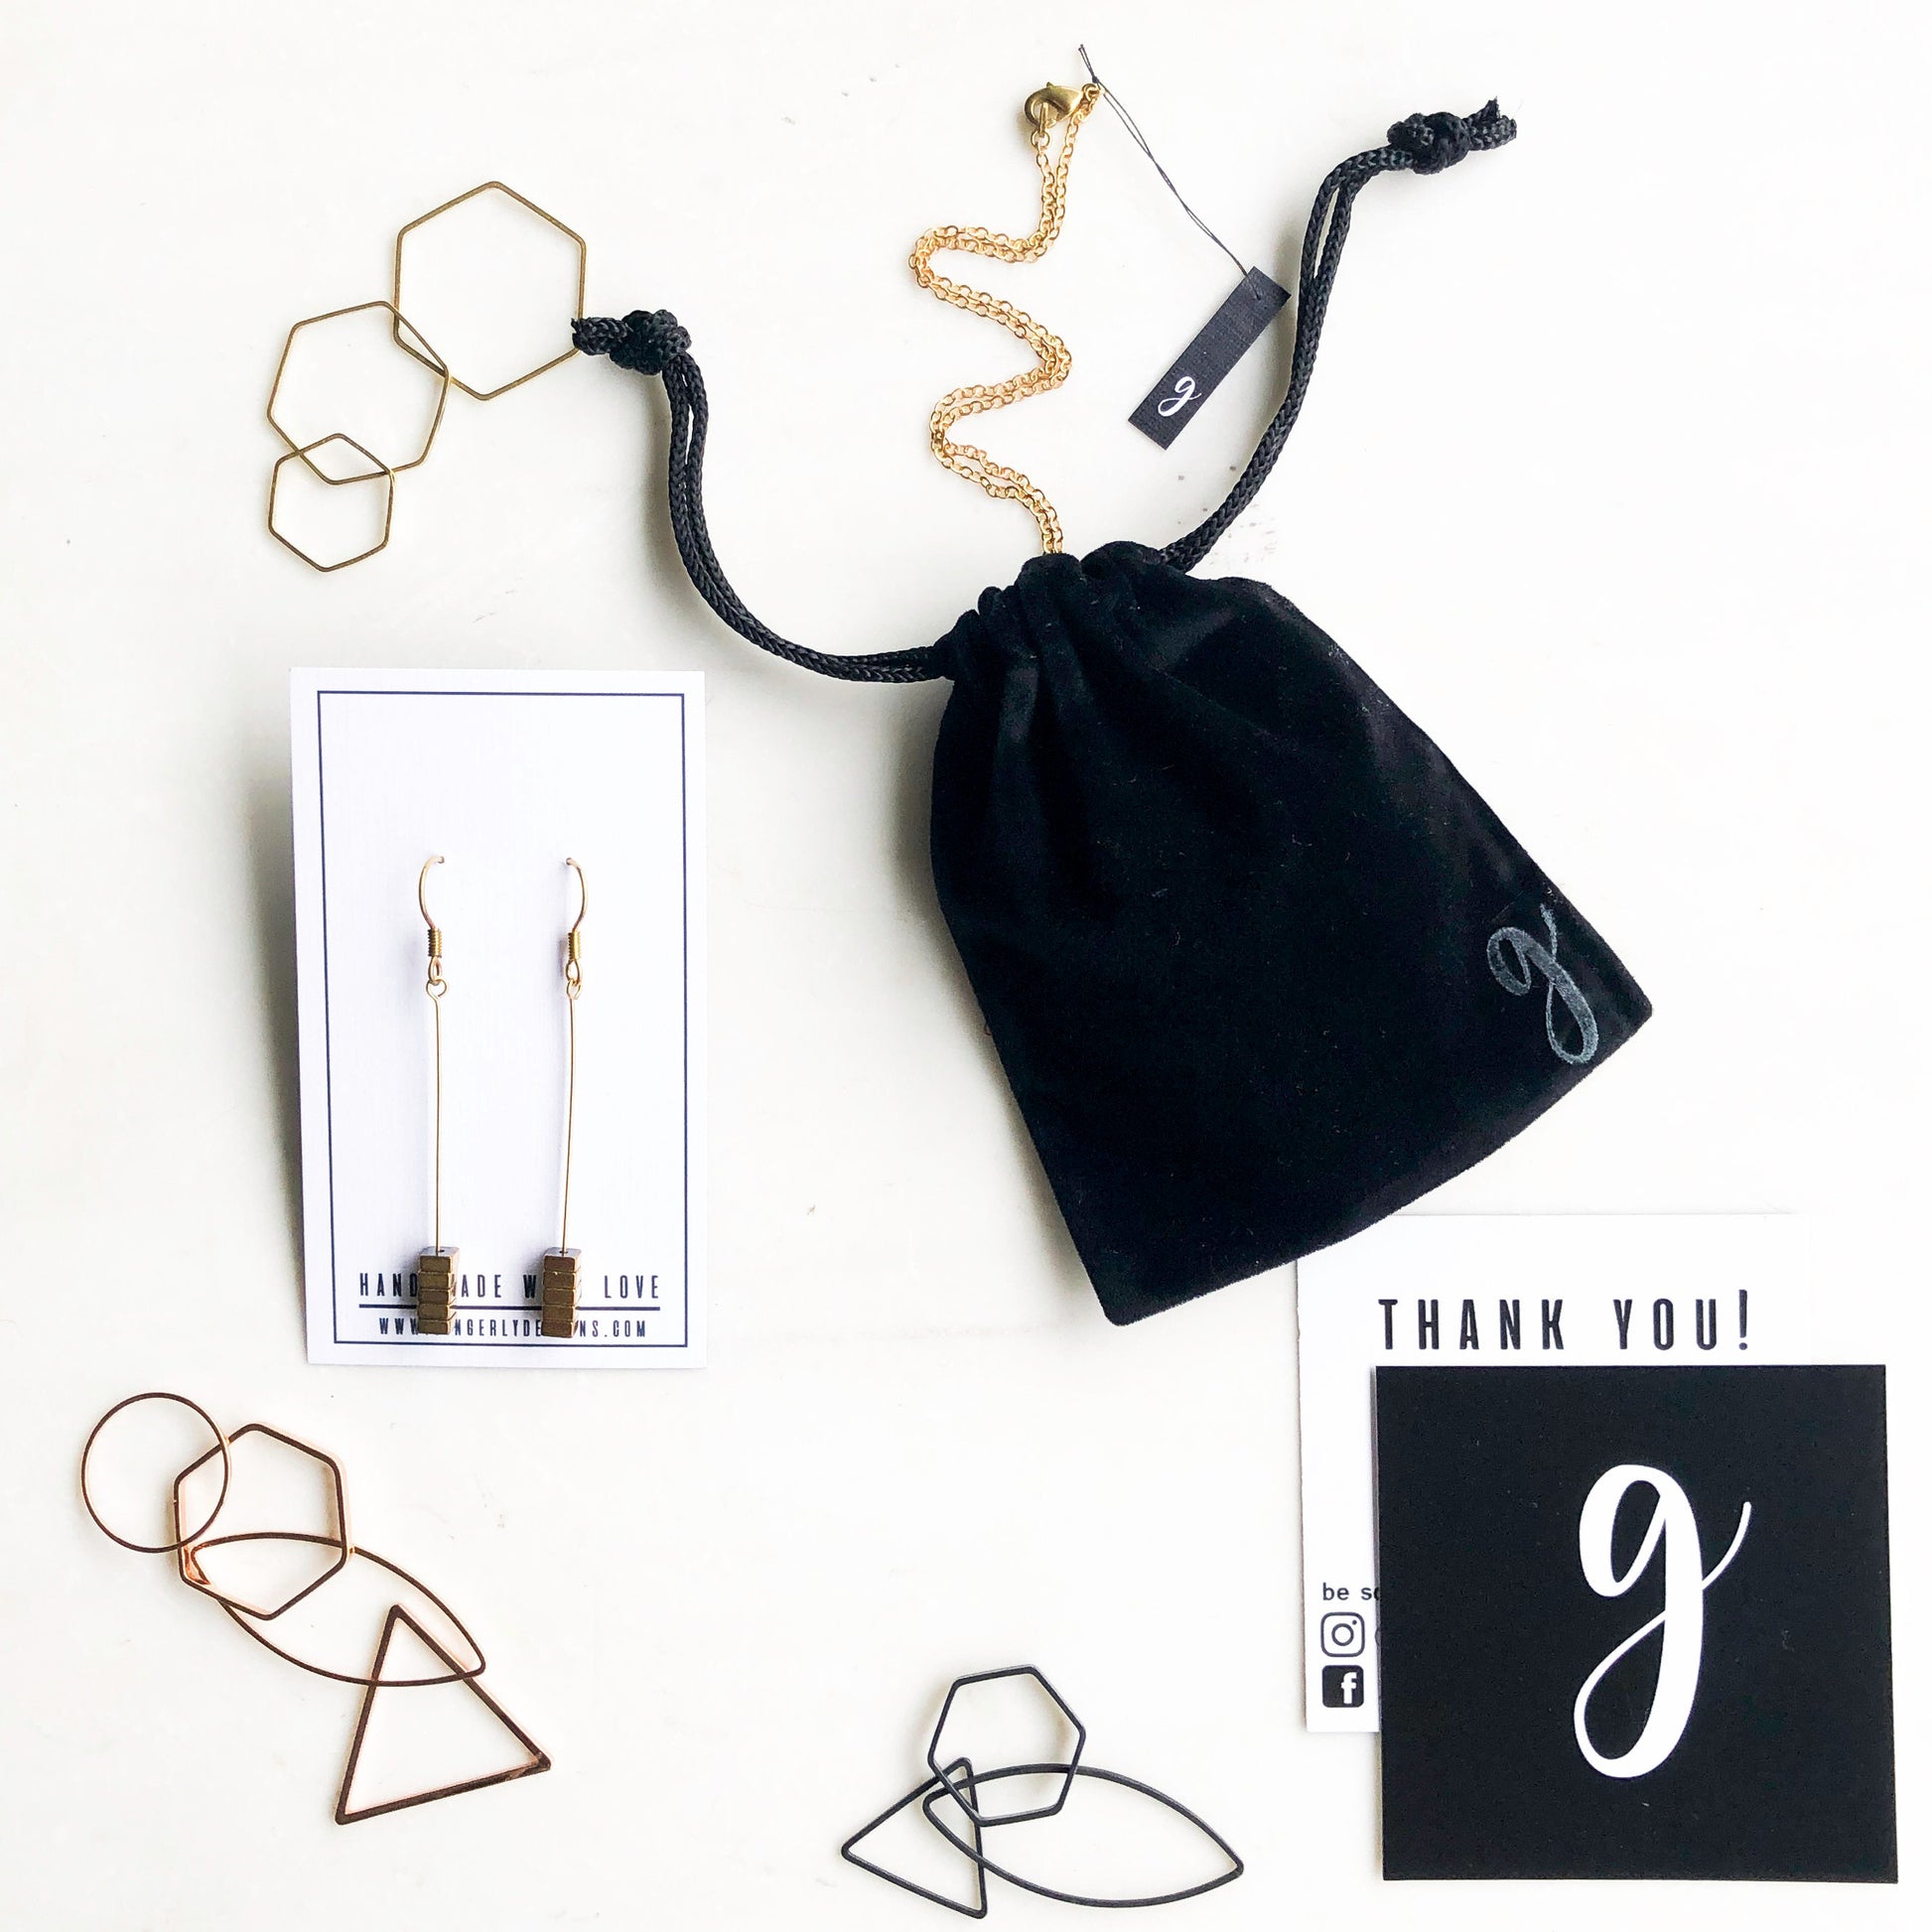 Black and white earrings, triangle hoop earrings, polka dot earrings, gold hoop earrings, unique earrings